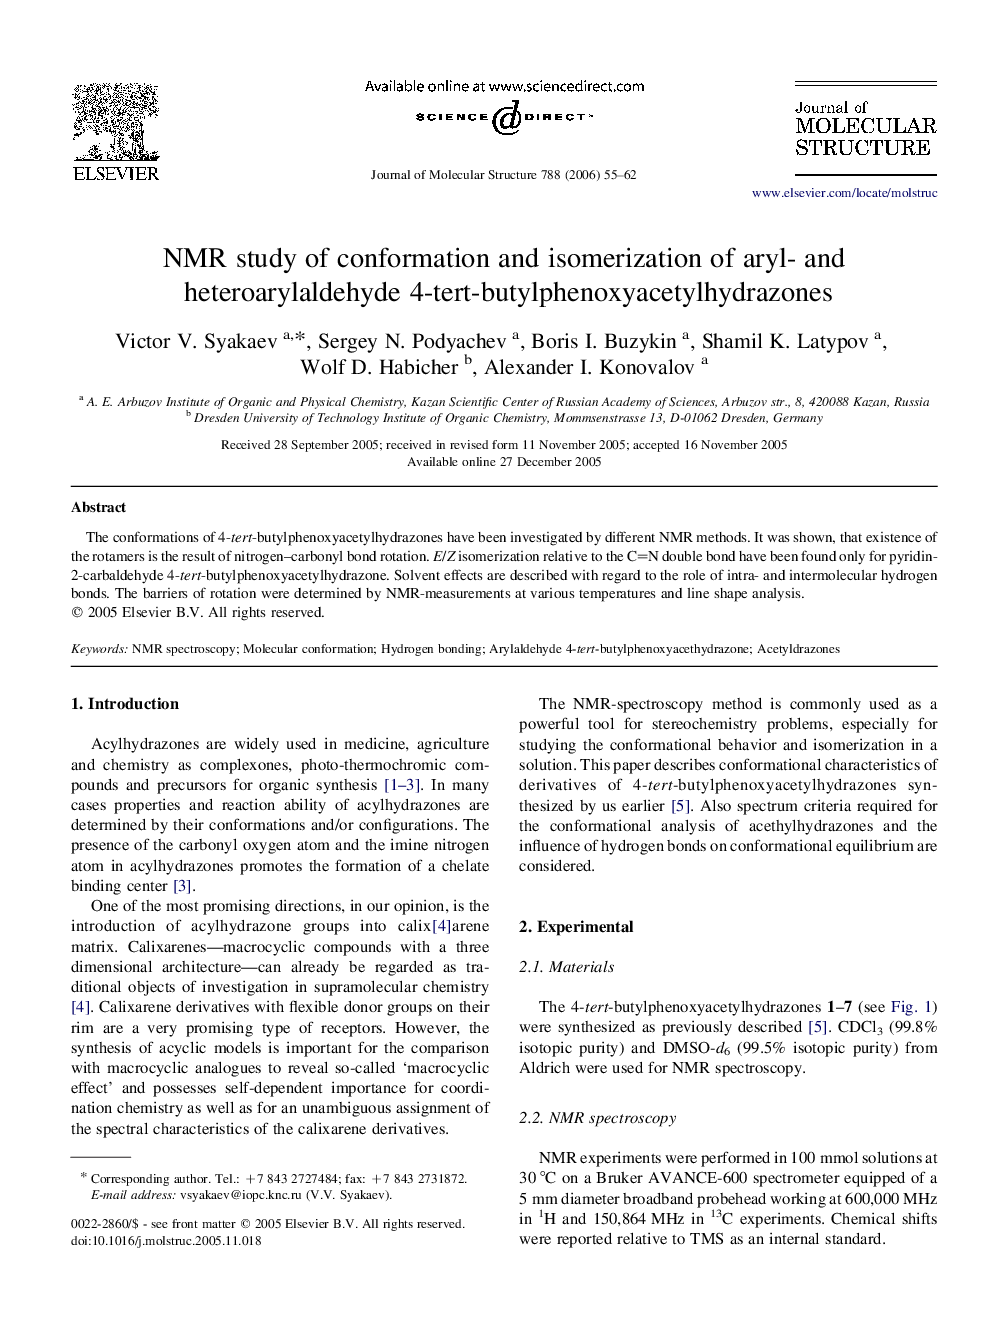 NMR study of conformation and isomerization of aryl- and heteroarylaldehyde 4-tert-butylphenoxyacetylhydrazones